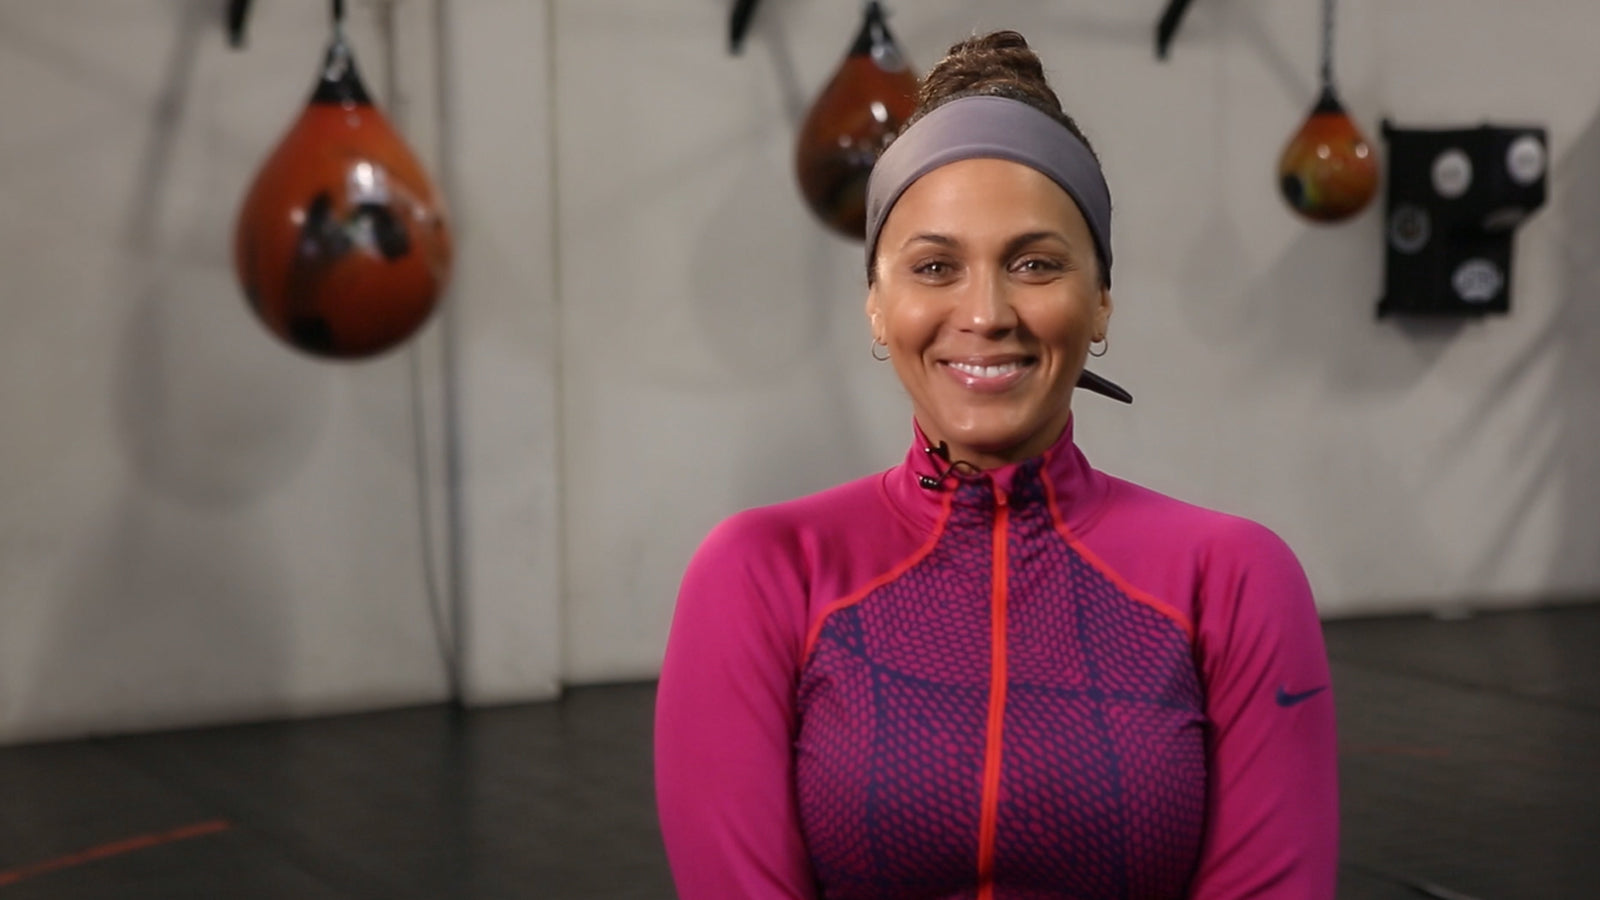 Load video: Nicole Ari Parker talks about inventing the gymwrap